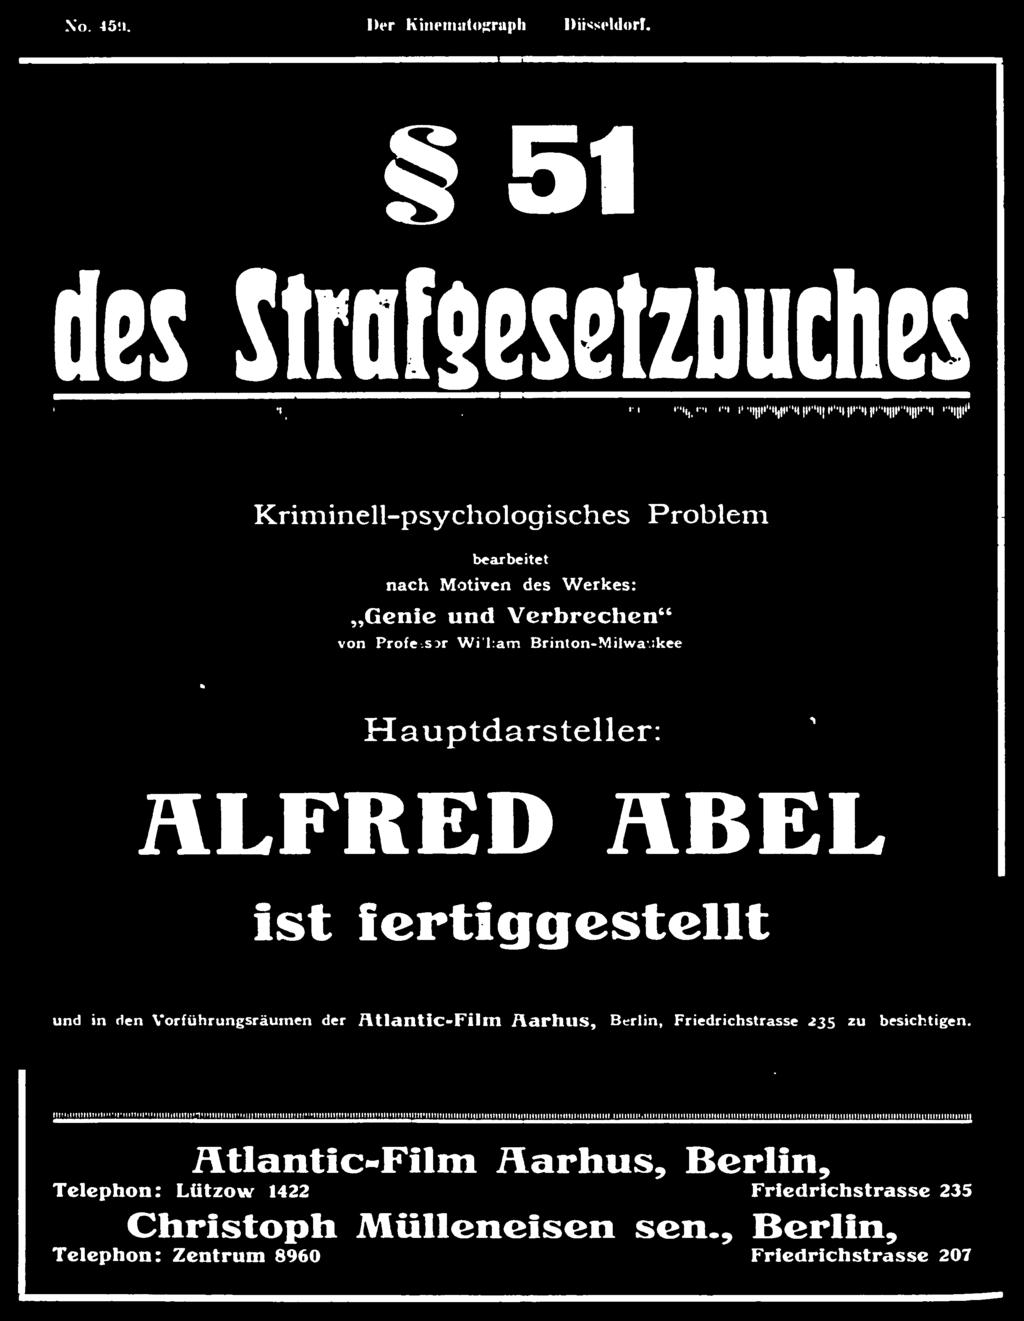 Atlantic-Film /farhus, Berlin, Friedrichstrasse 235 zu besichtigen.